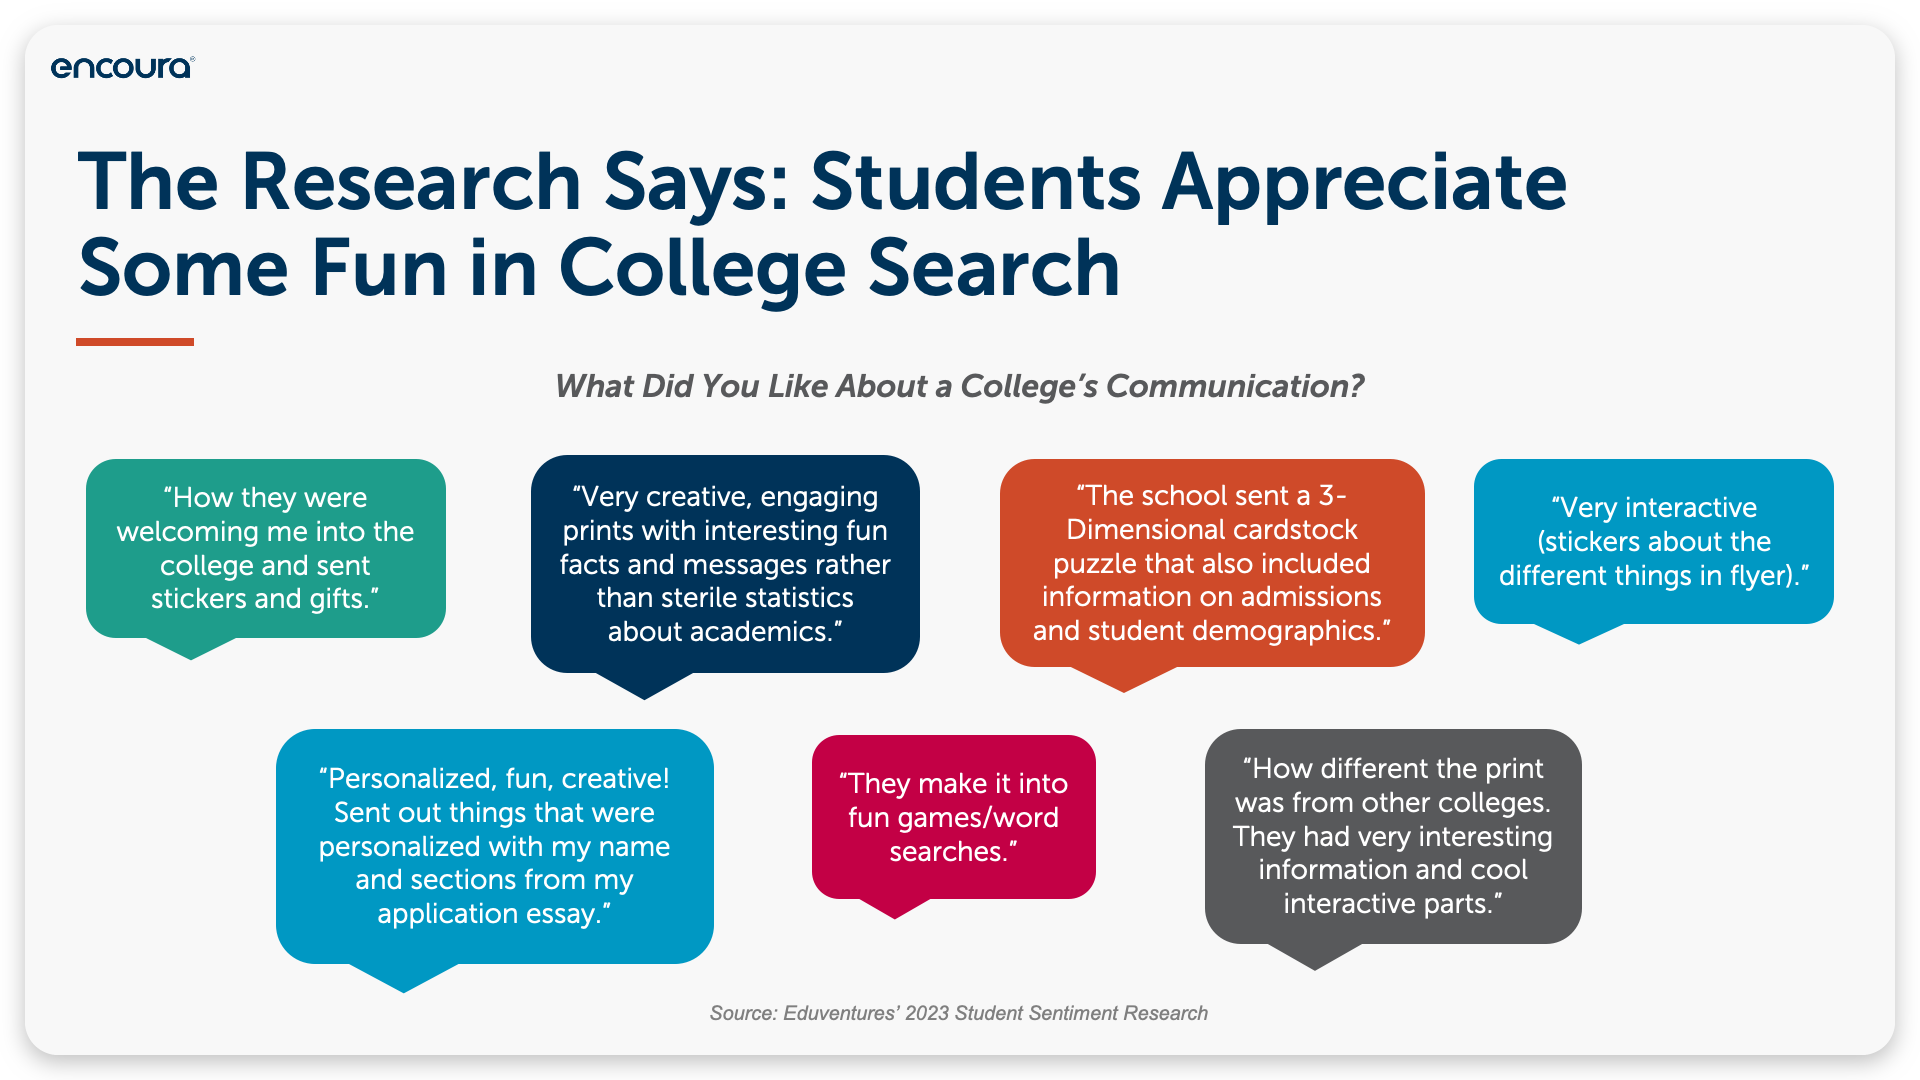 The Research Says: Students Appreciate Some Fun in College Search